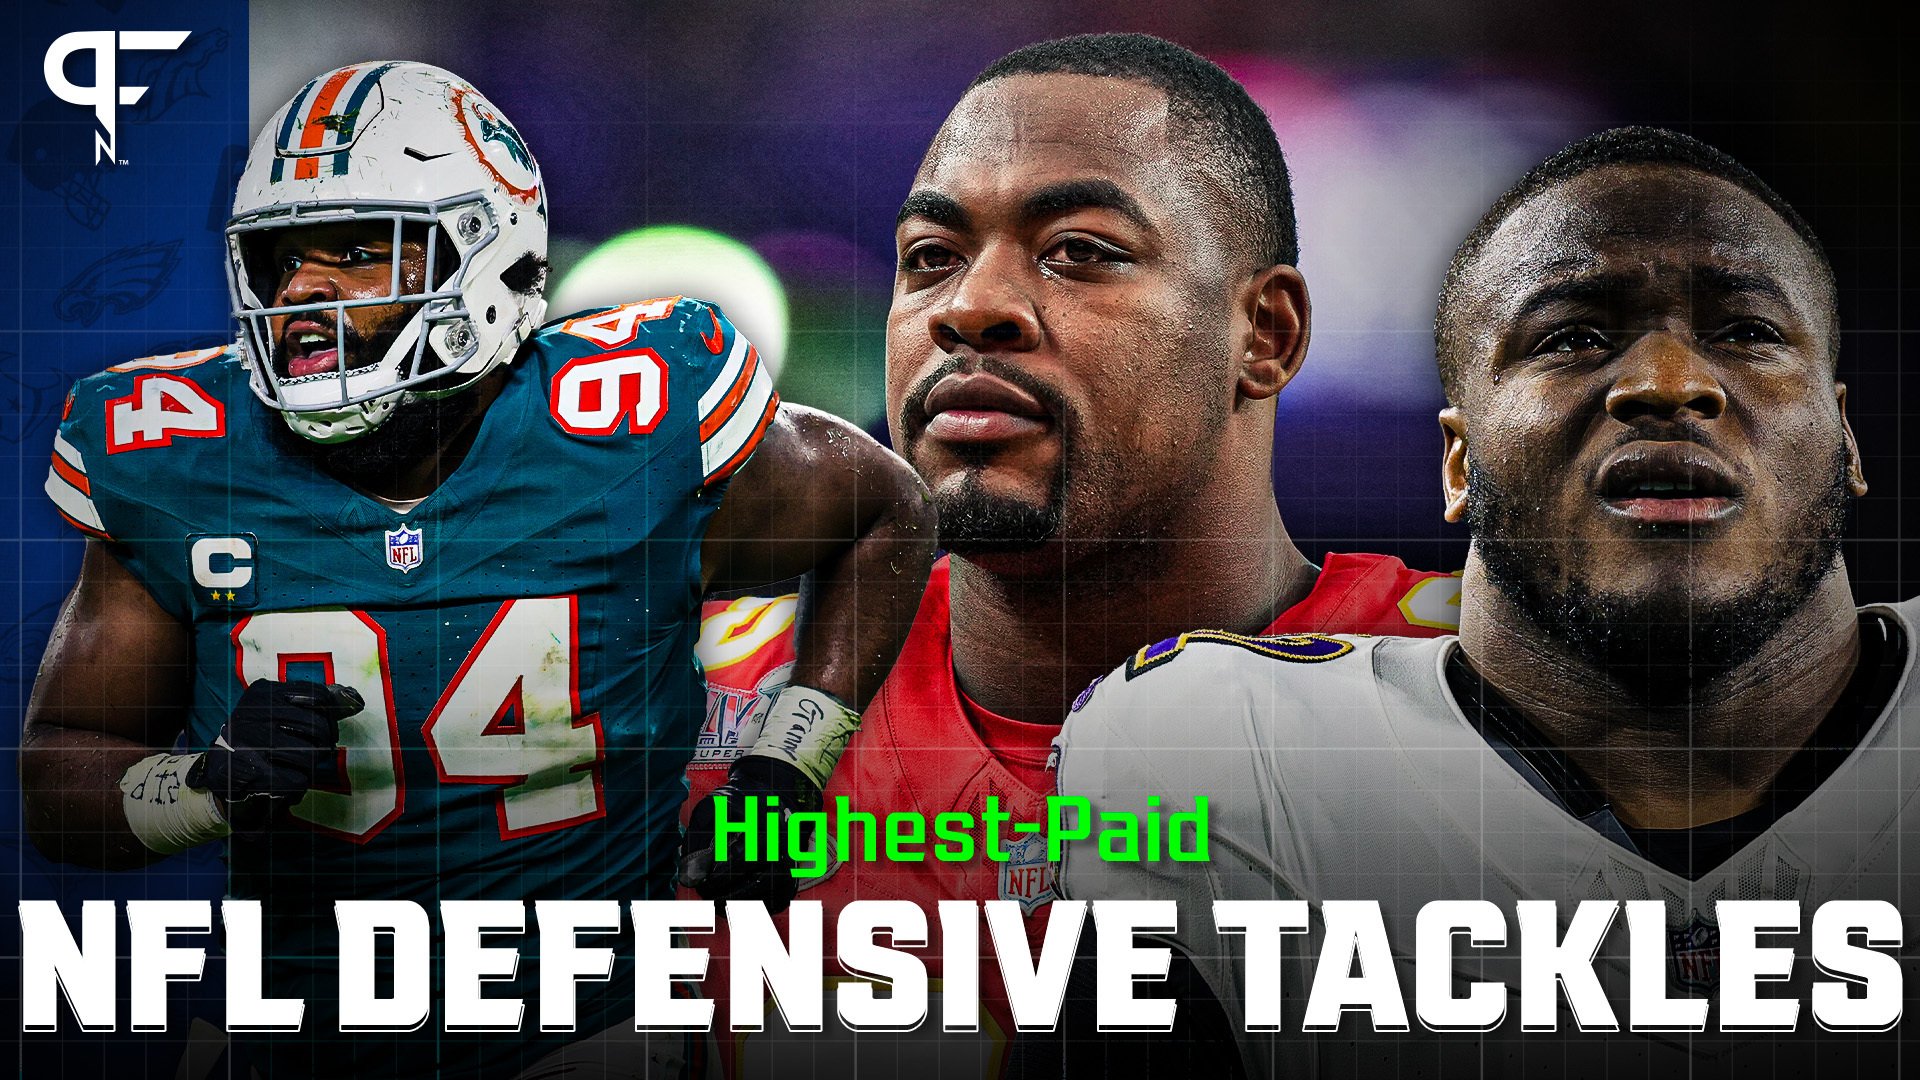 NFL highest-paid defensive tackles